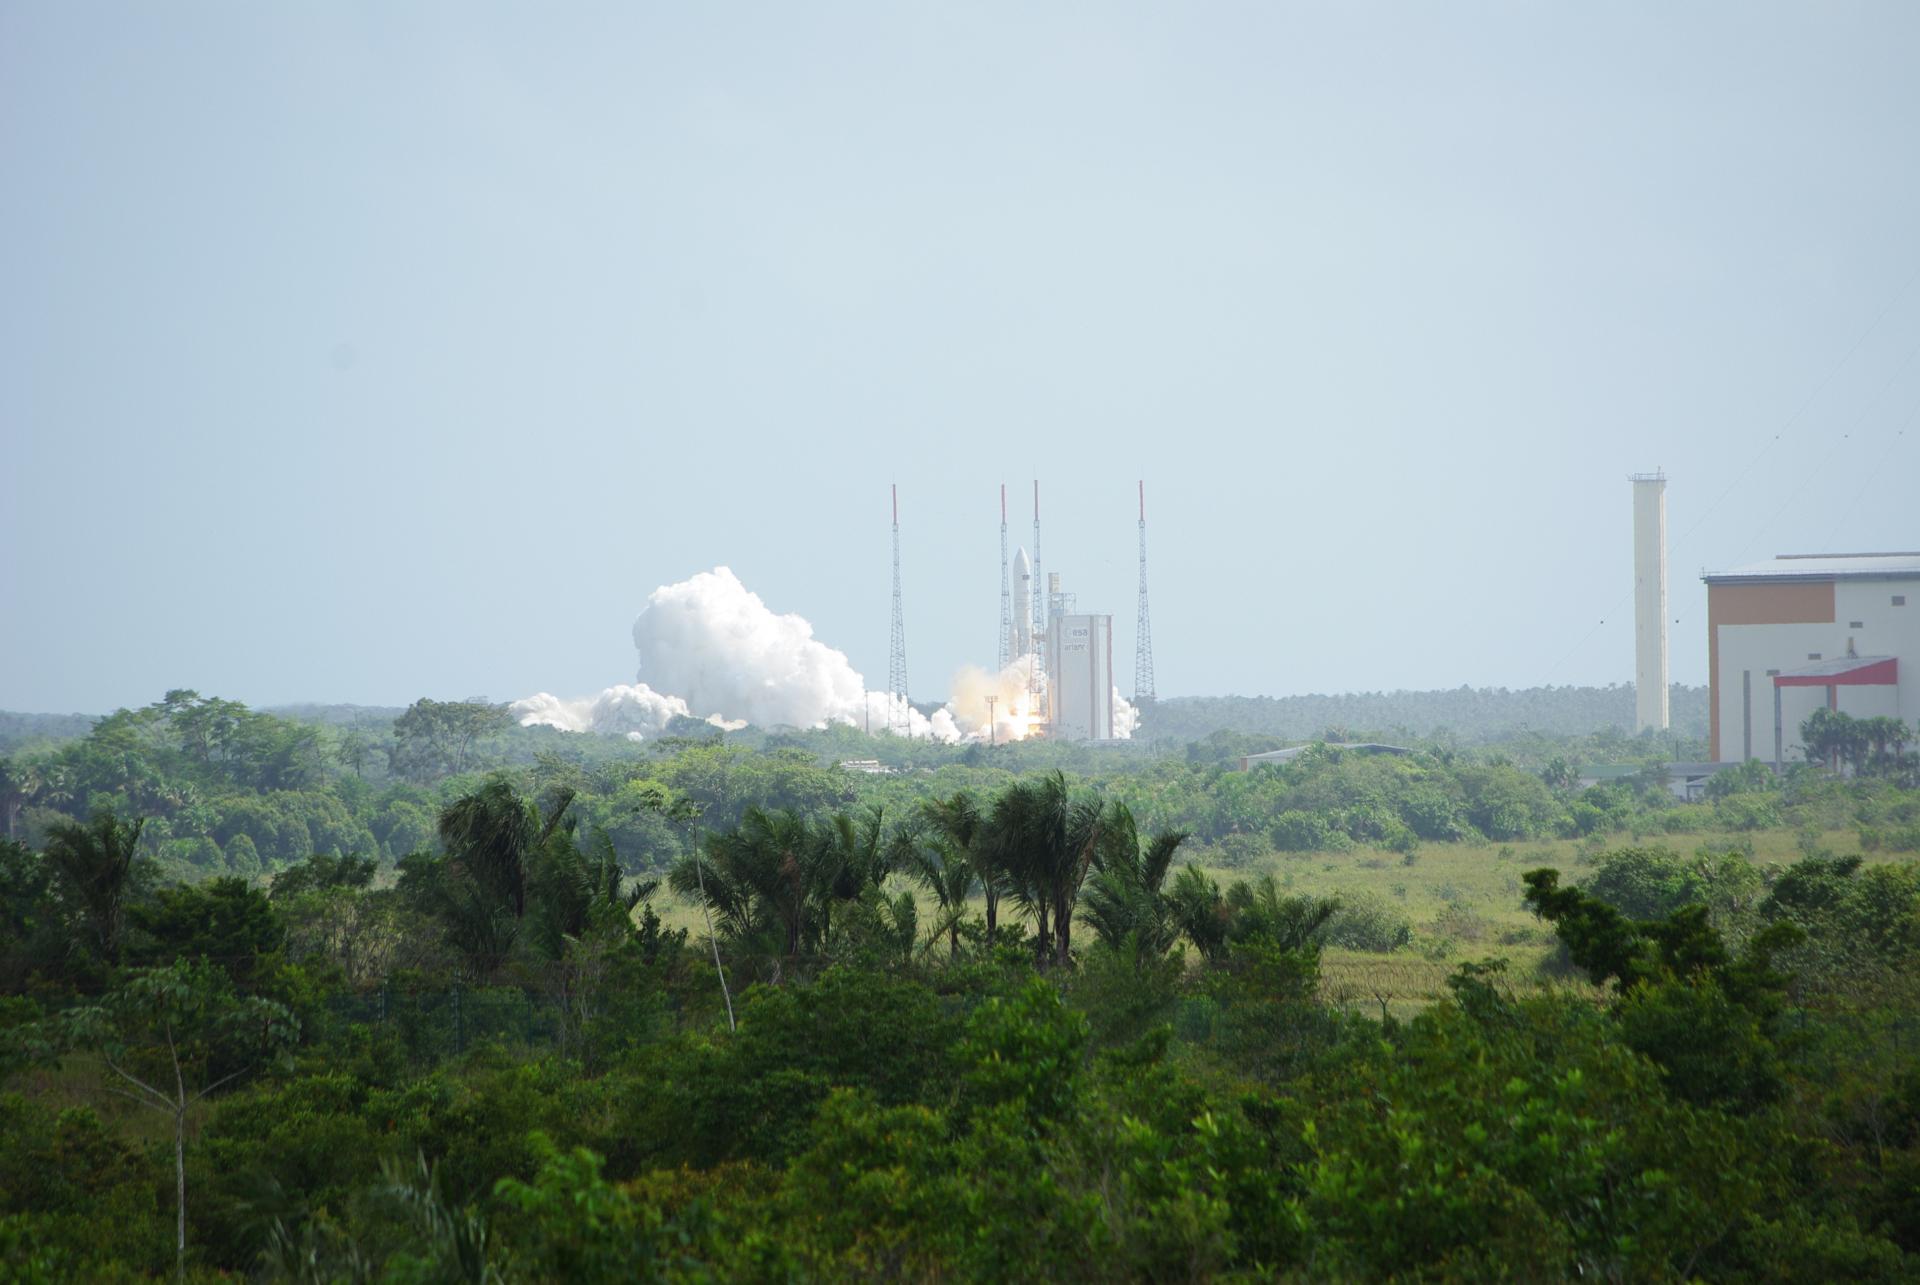 Lancement à Kourou des satellites Planck et Herschel par Ariane 5